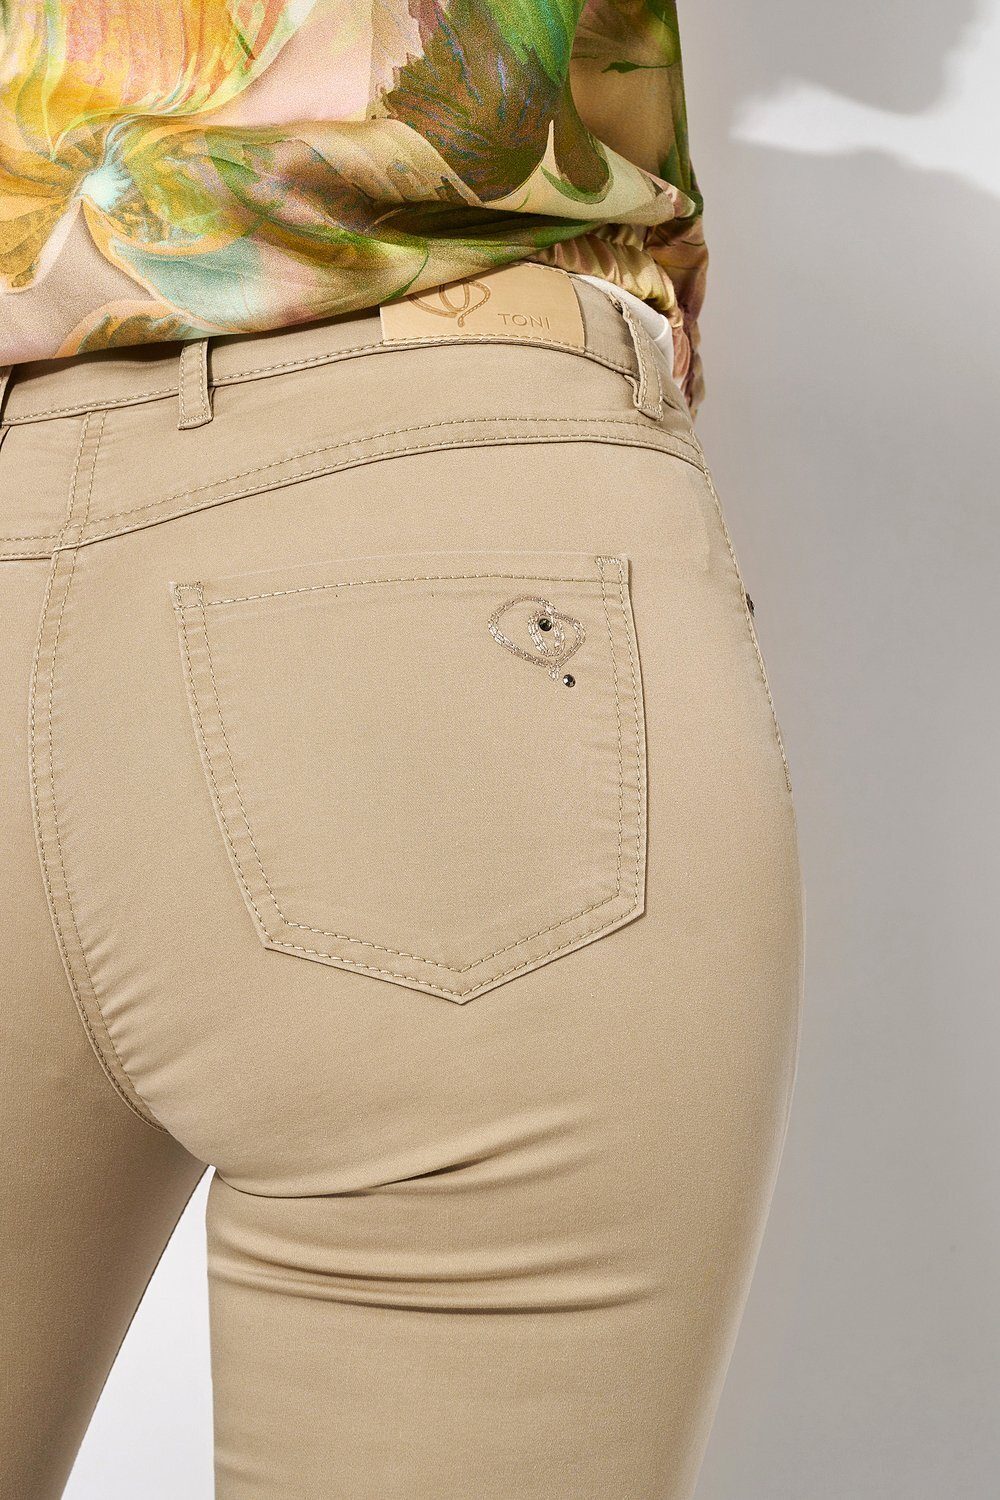 Shape Perfect - TONI aus softer 072 5-Pocket-Hose beige Baumwolle